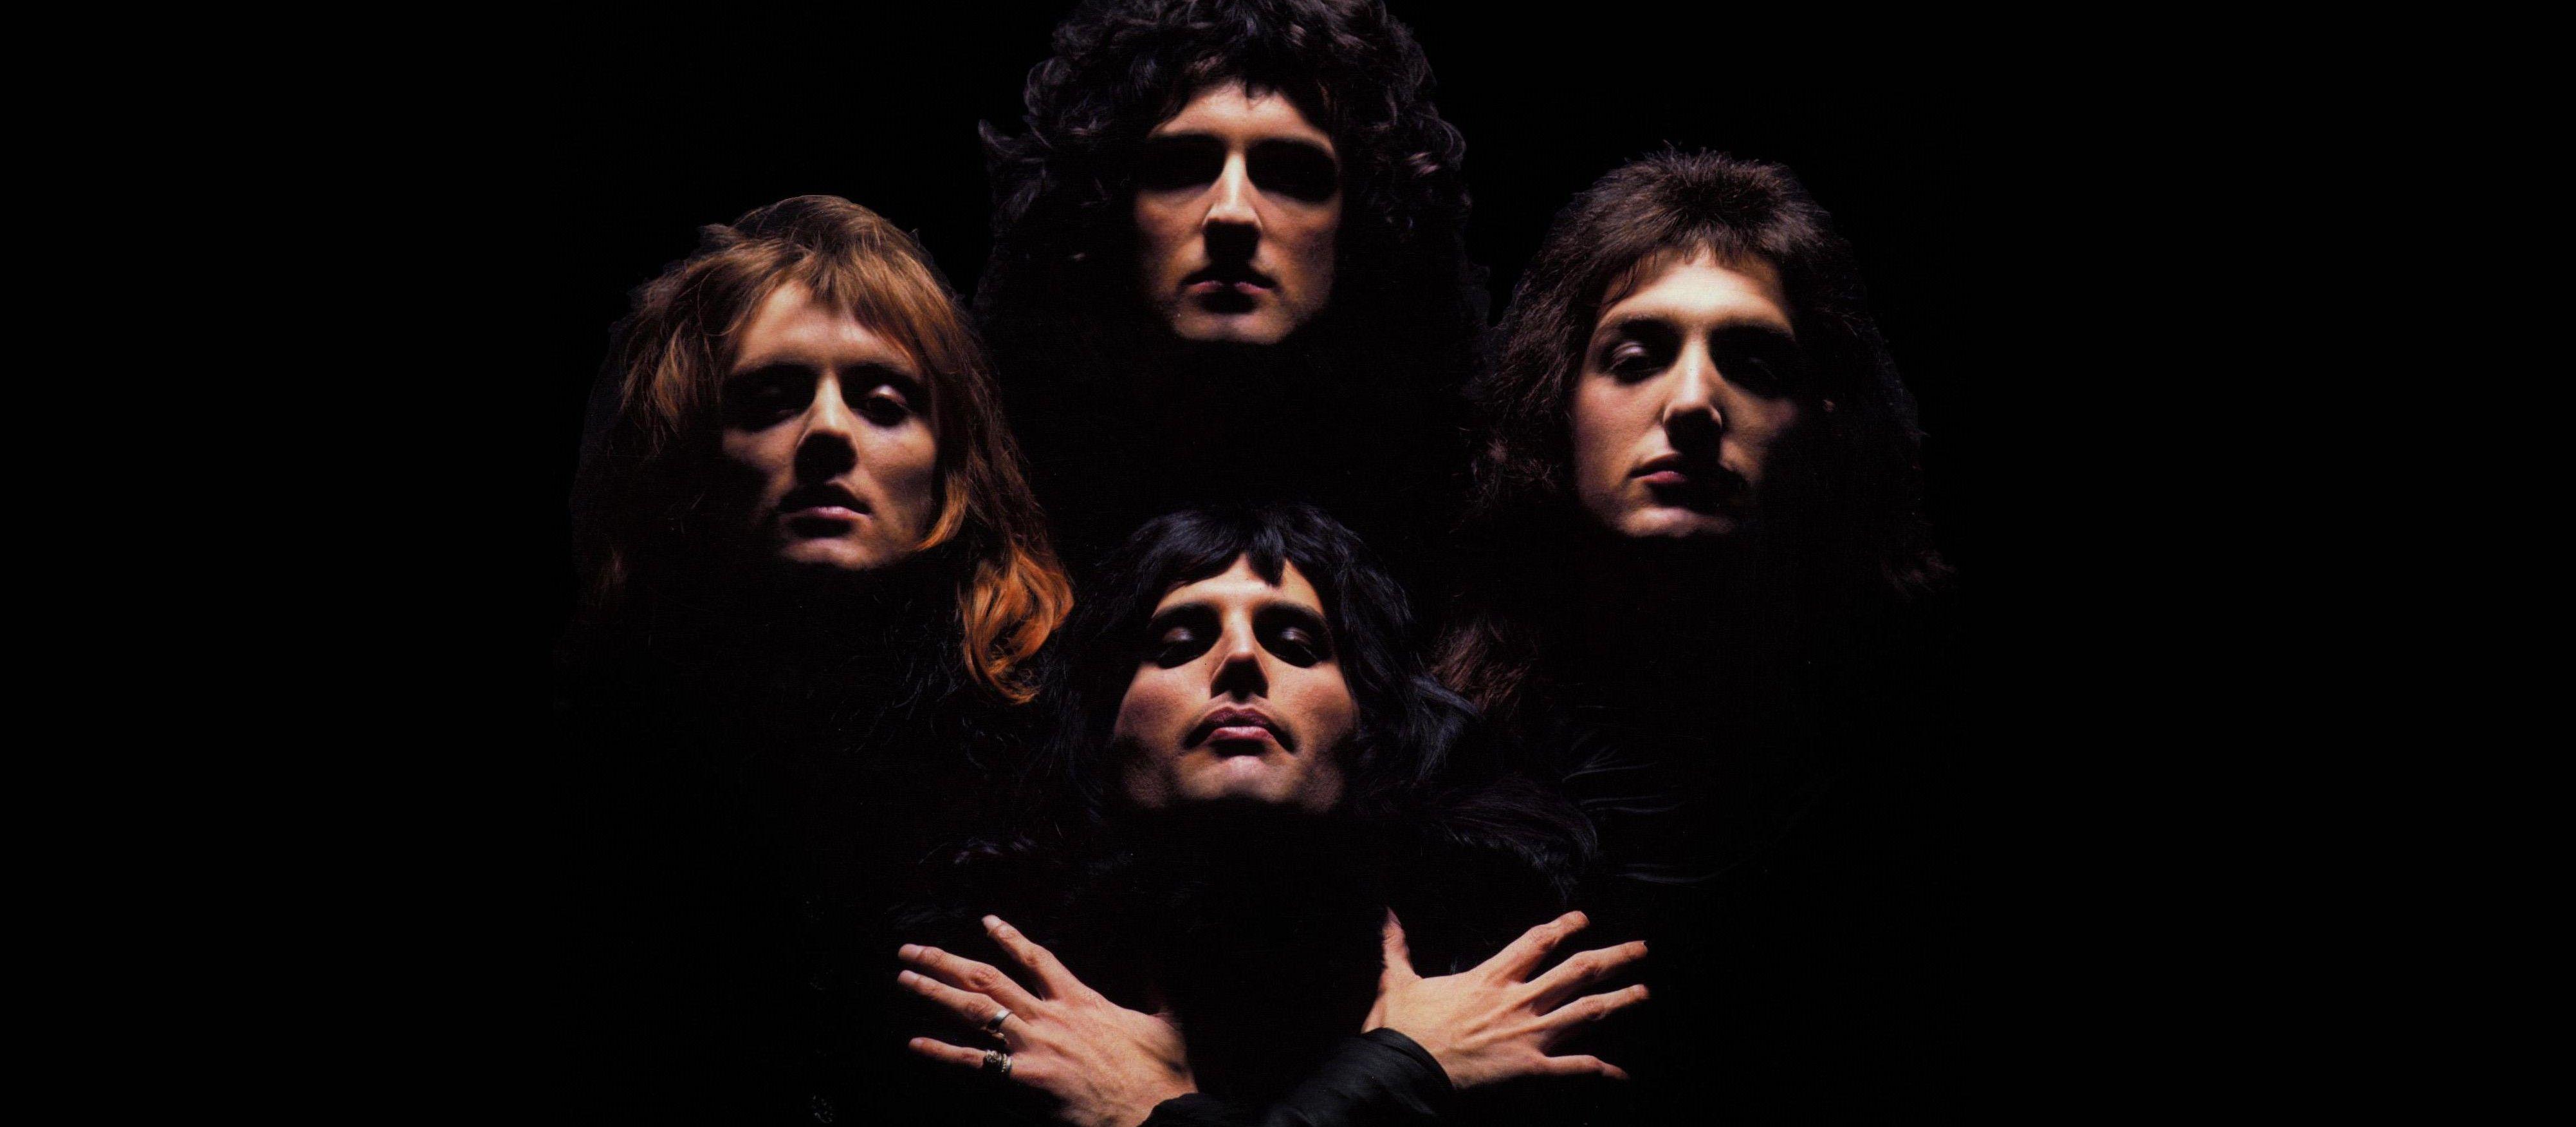 Bohemian Rhapsody for iphone download